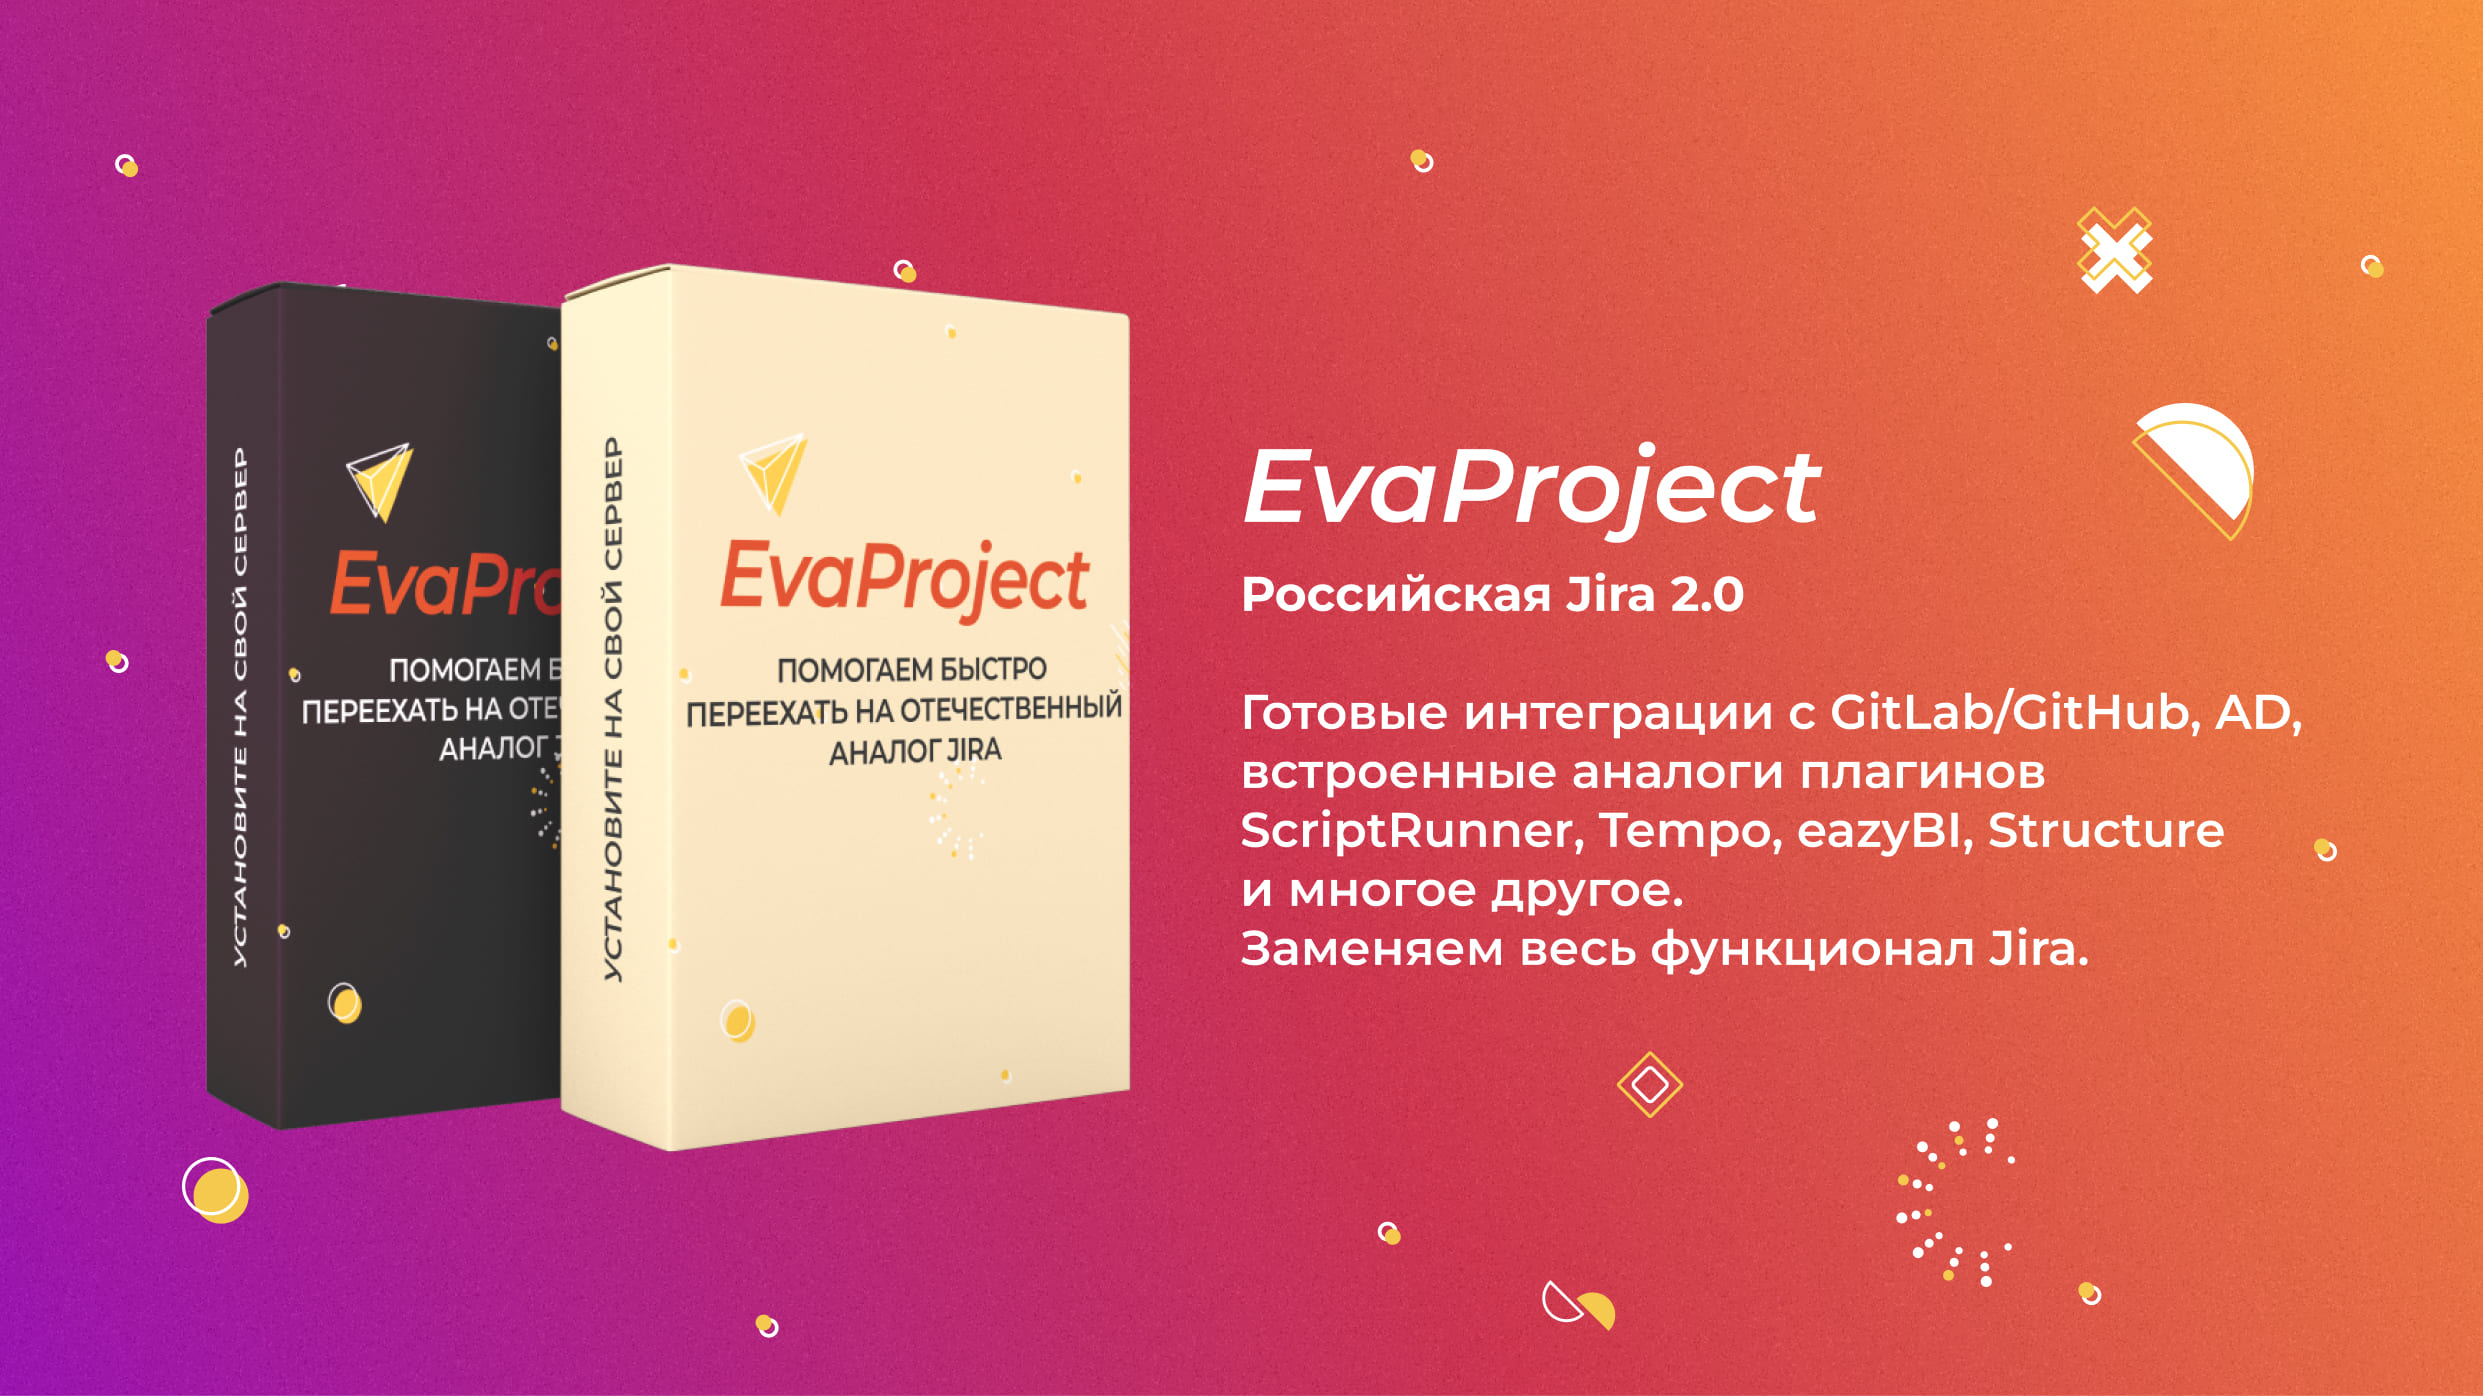 EvaProject - Российская Jira 2.0